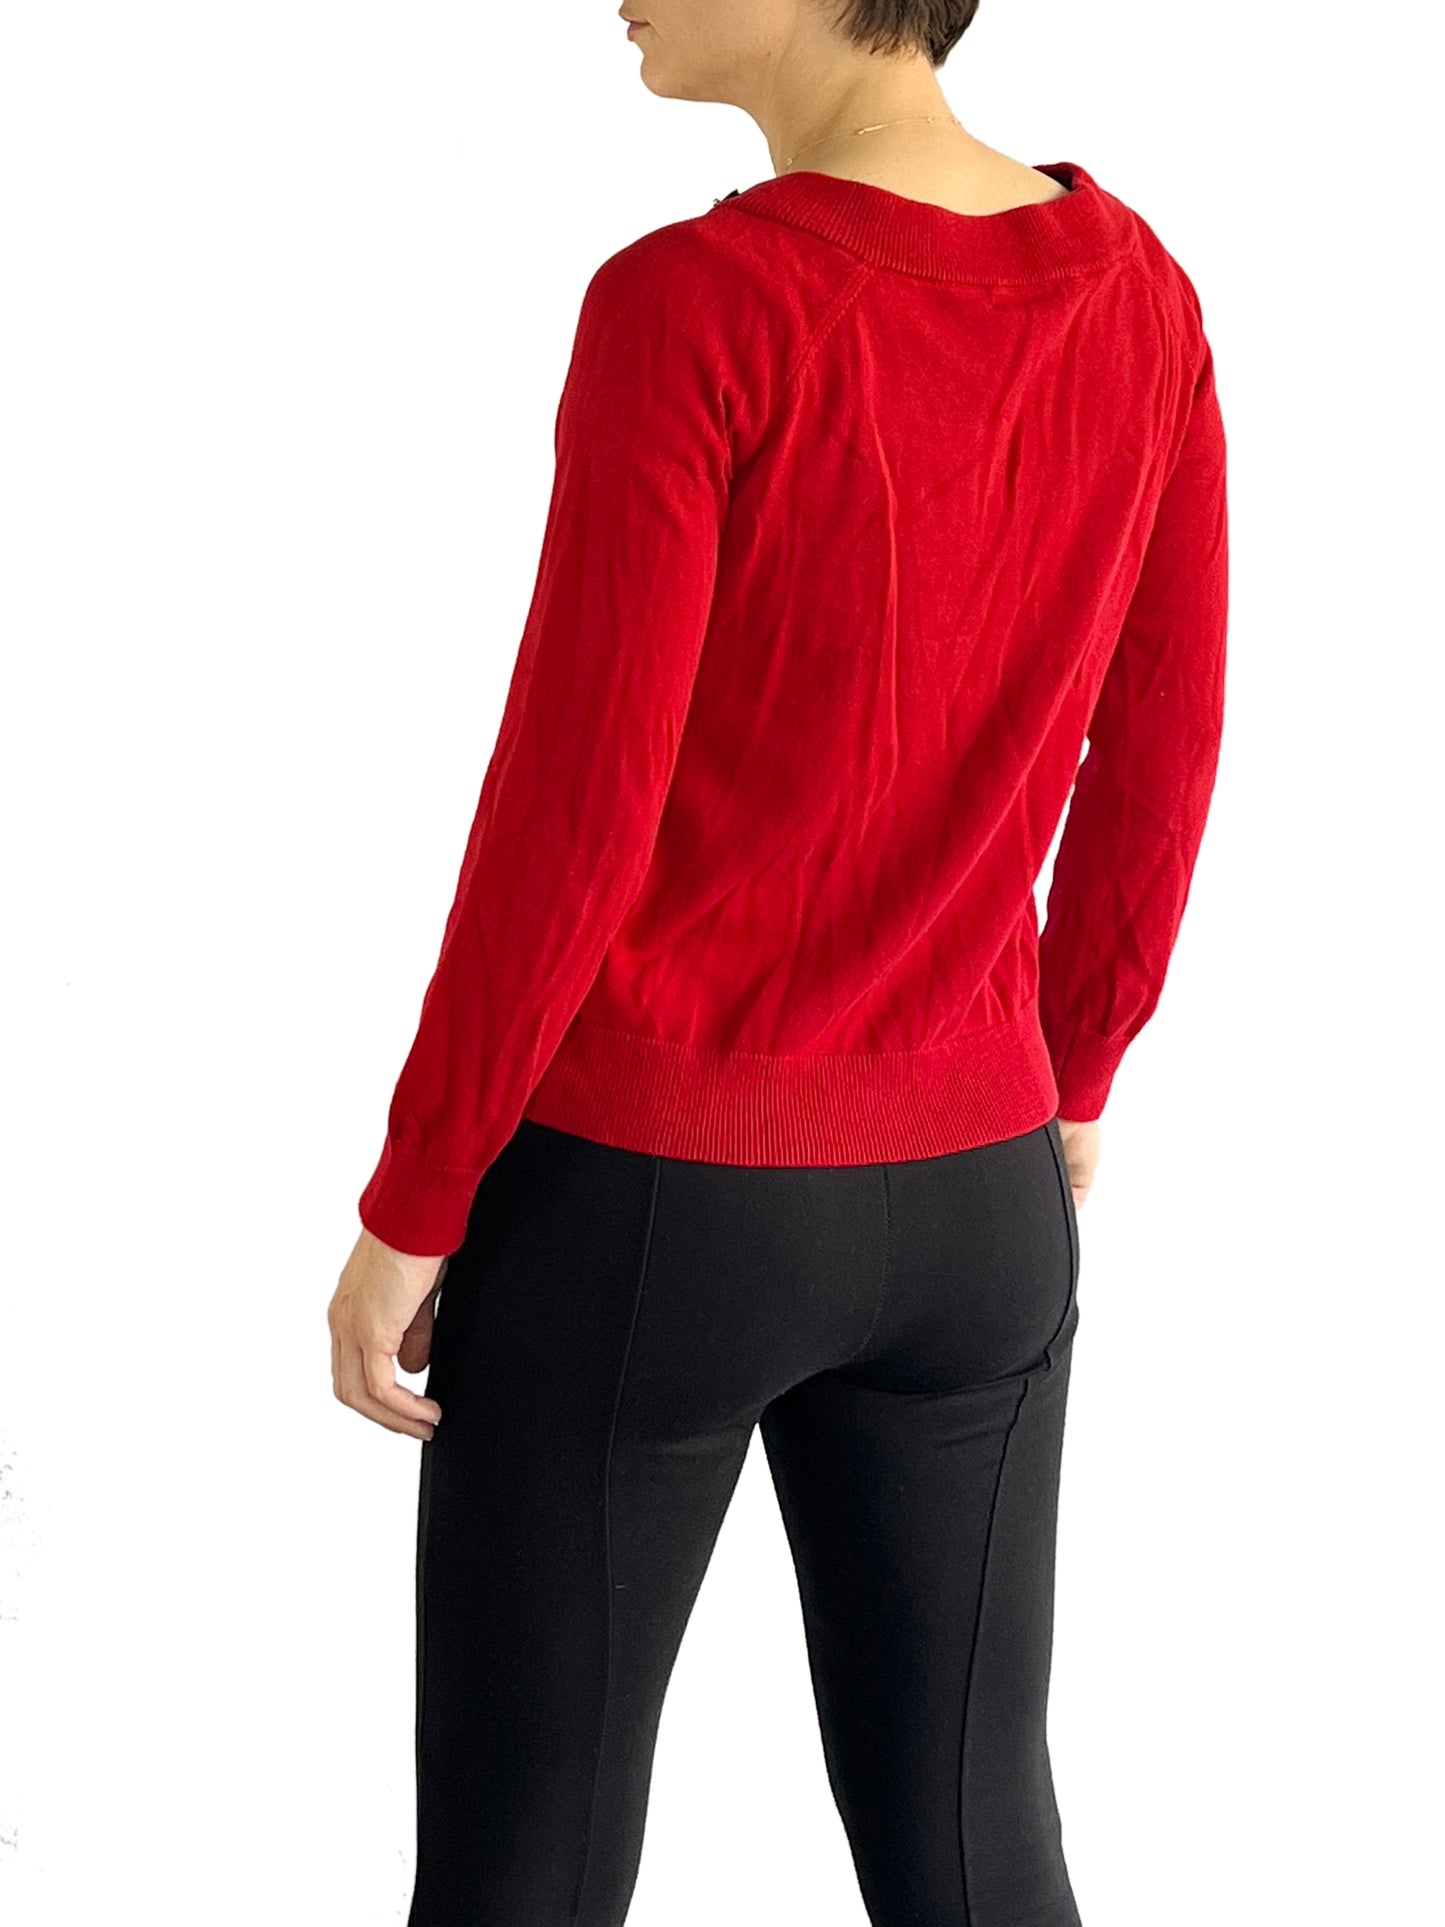 Ralph Lauren Top Sweater Red Size M SKU 000043